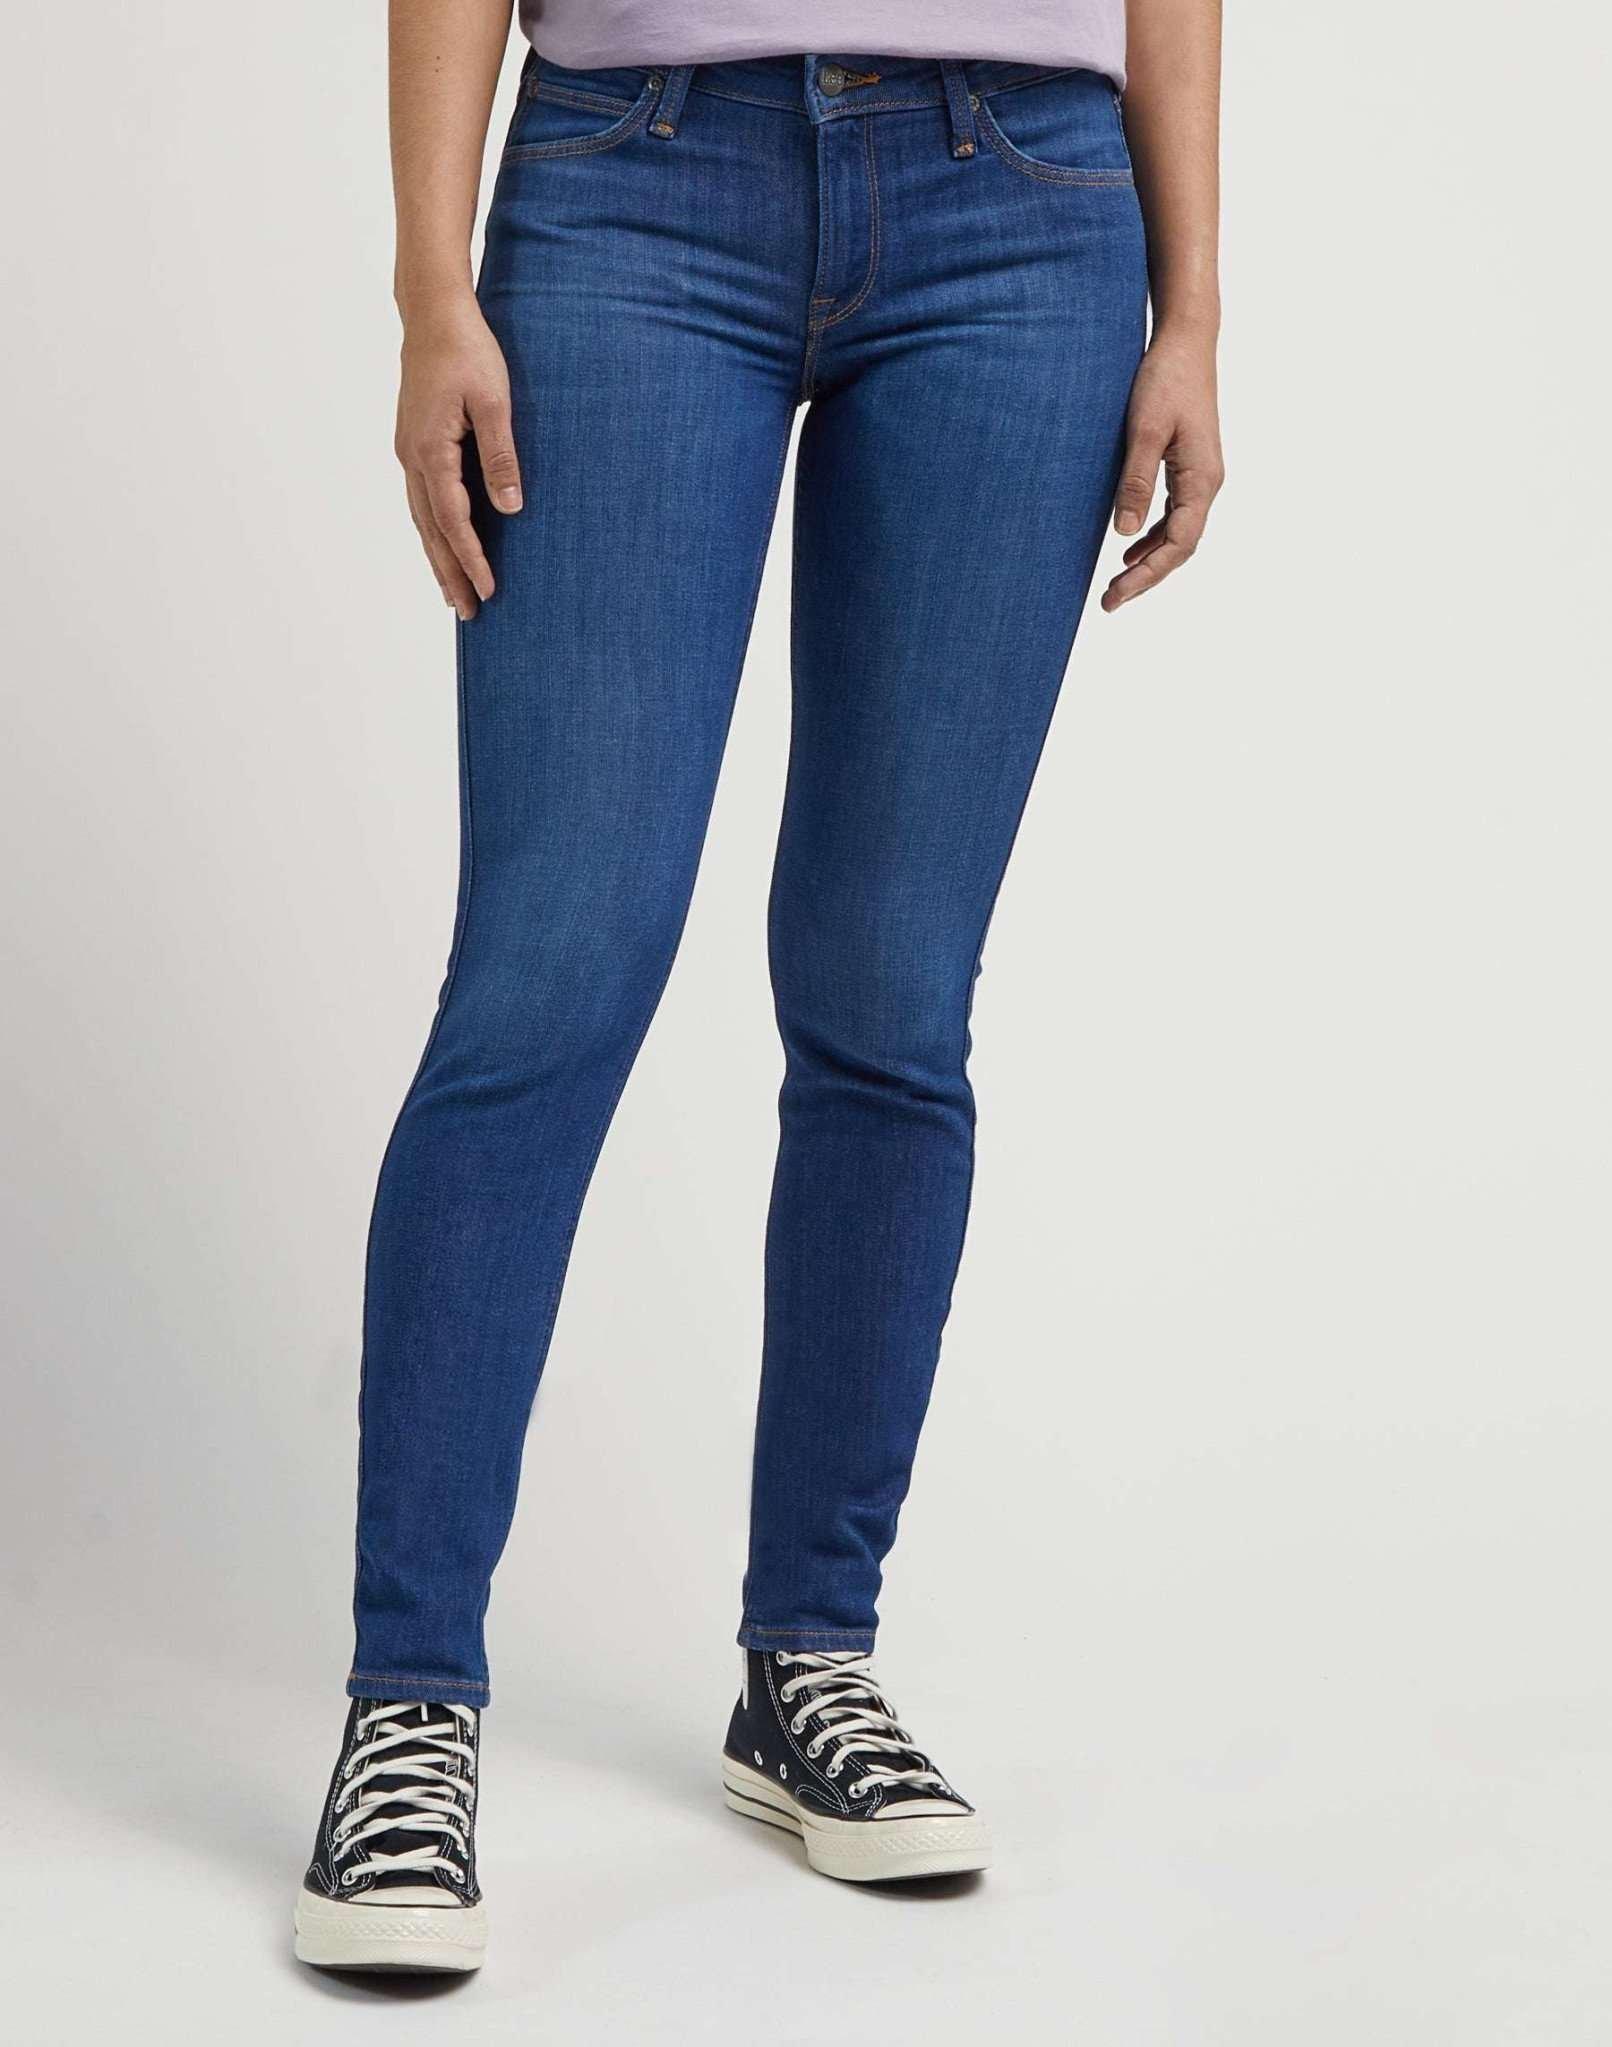 Jeans Skinny Fit Scarlett Damen Blau L33/W26 von Lee